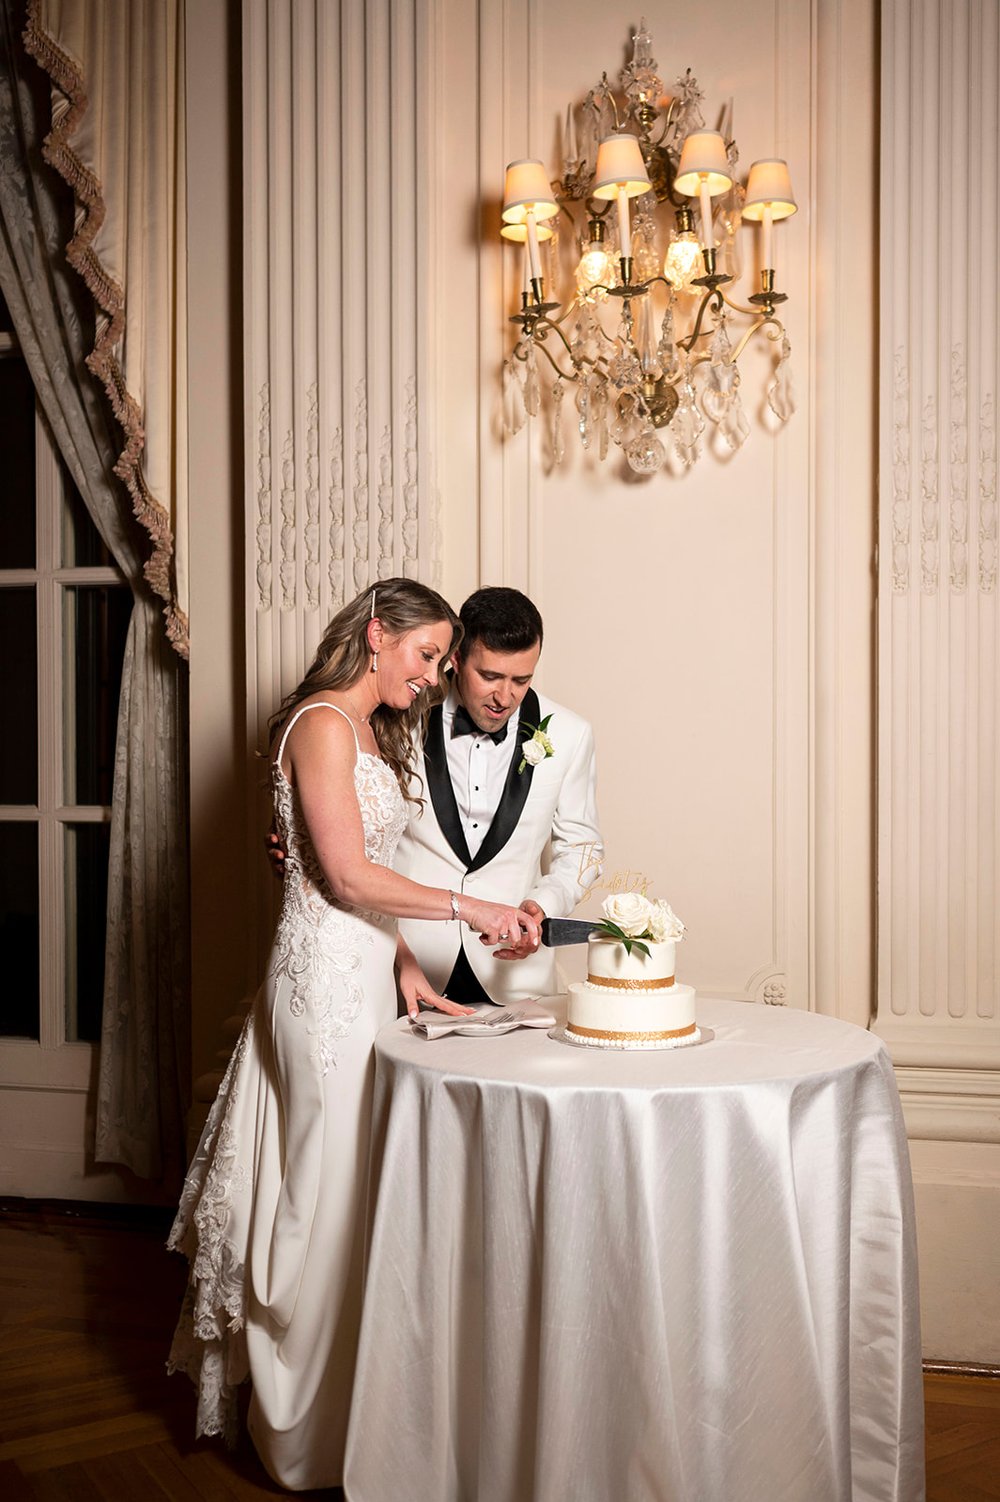  bride and groom cutting wedding cake 